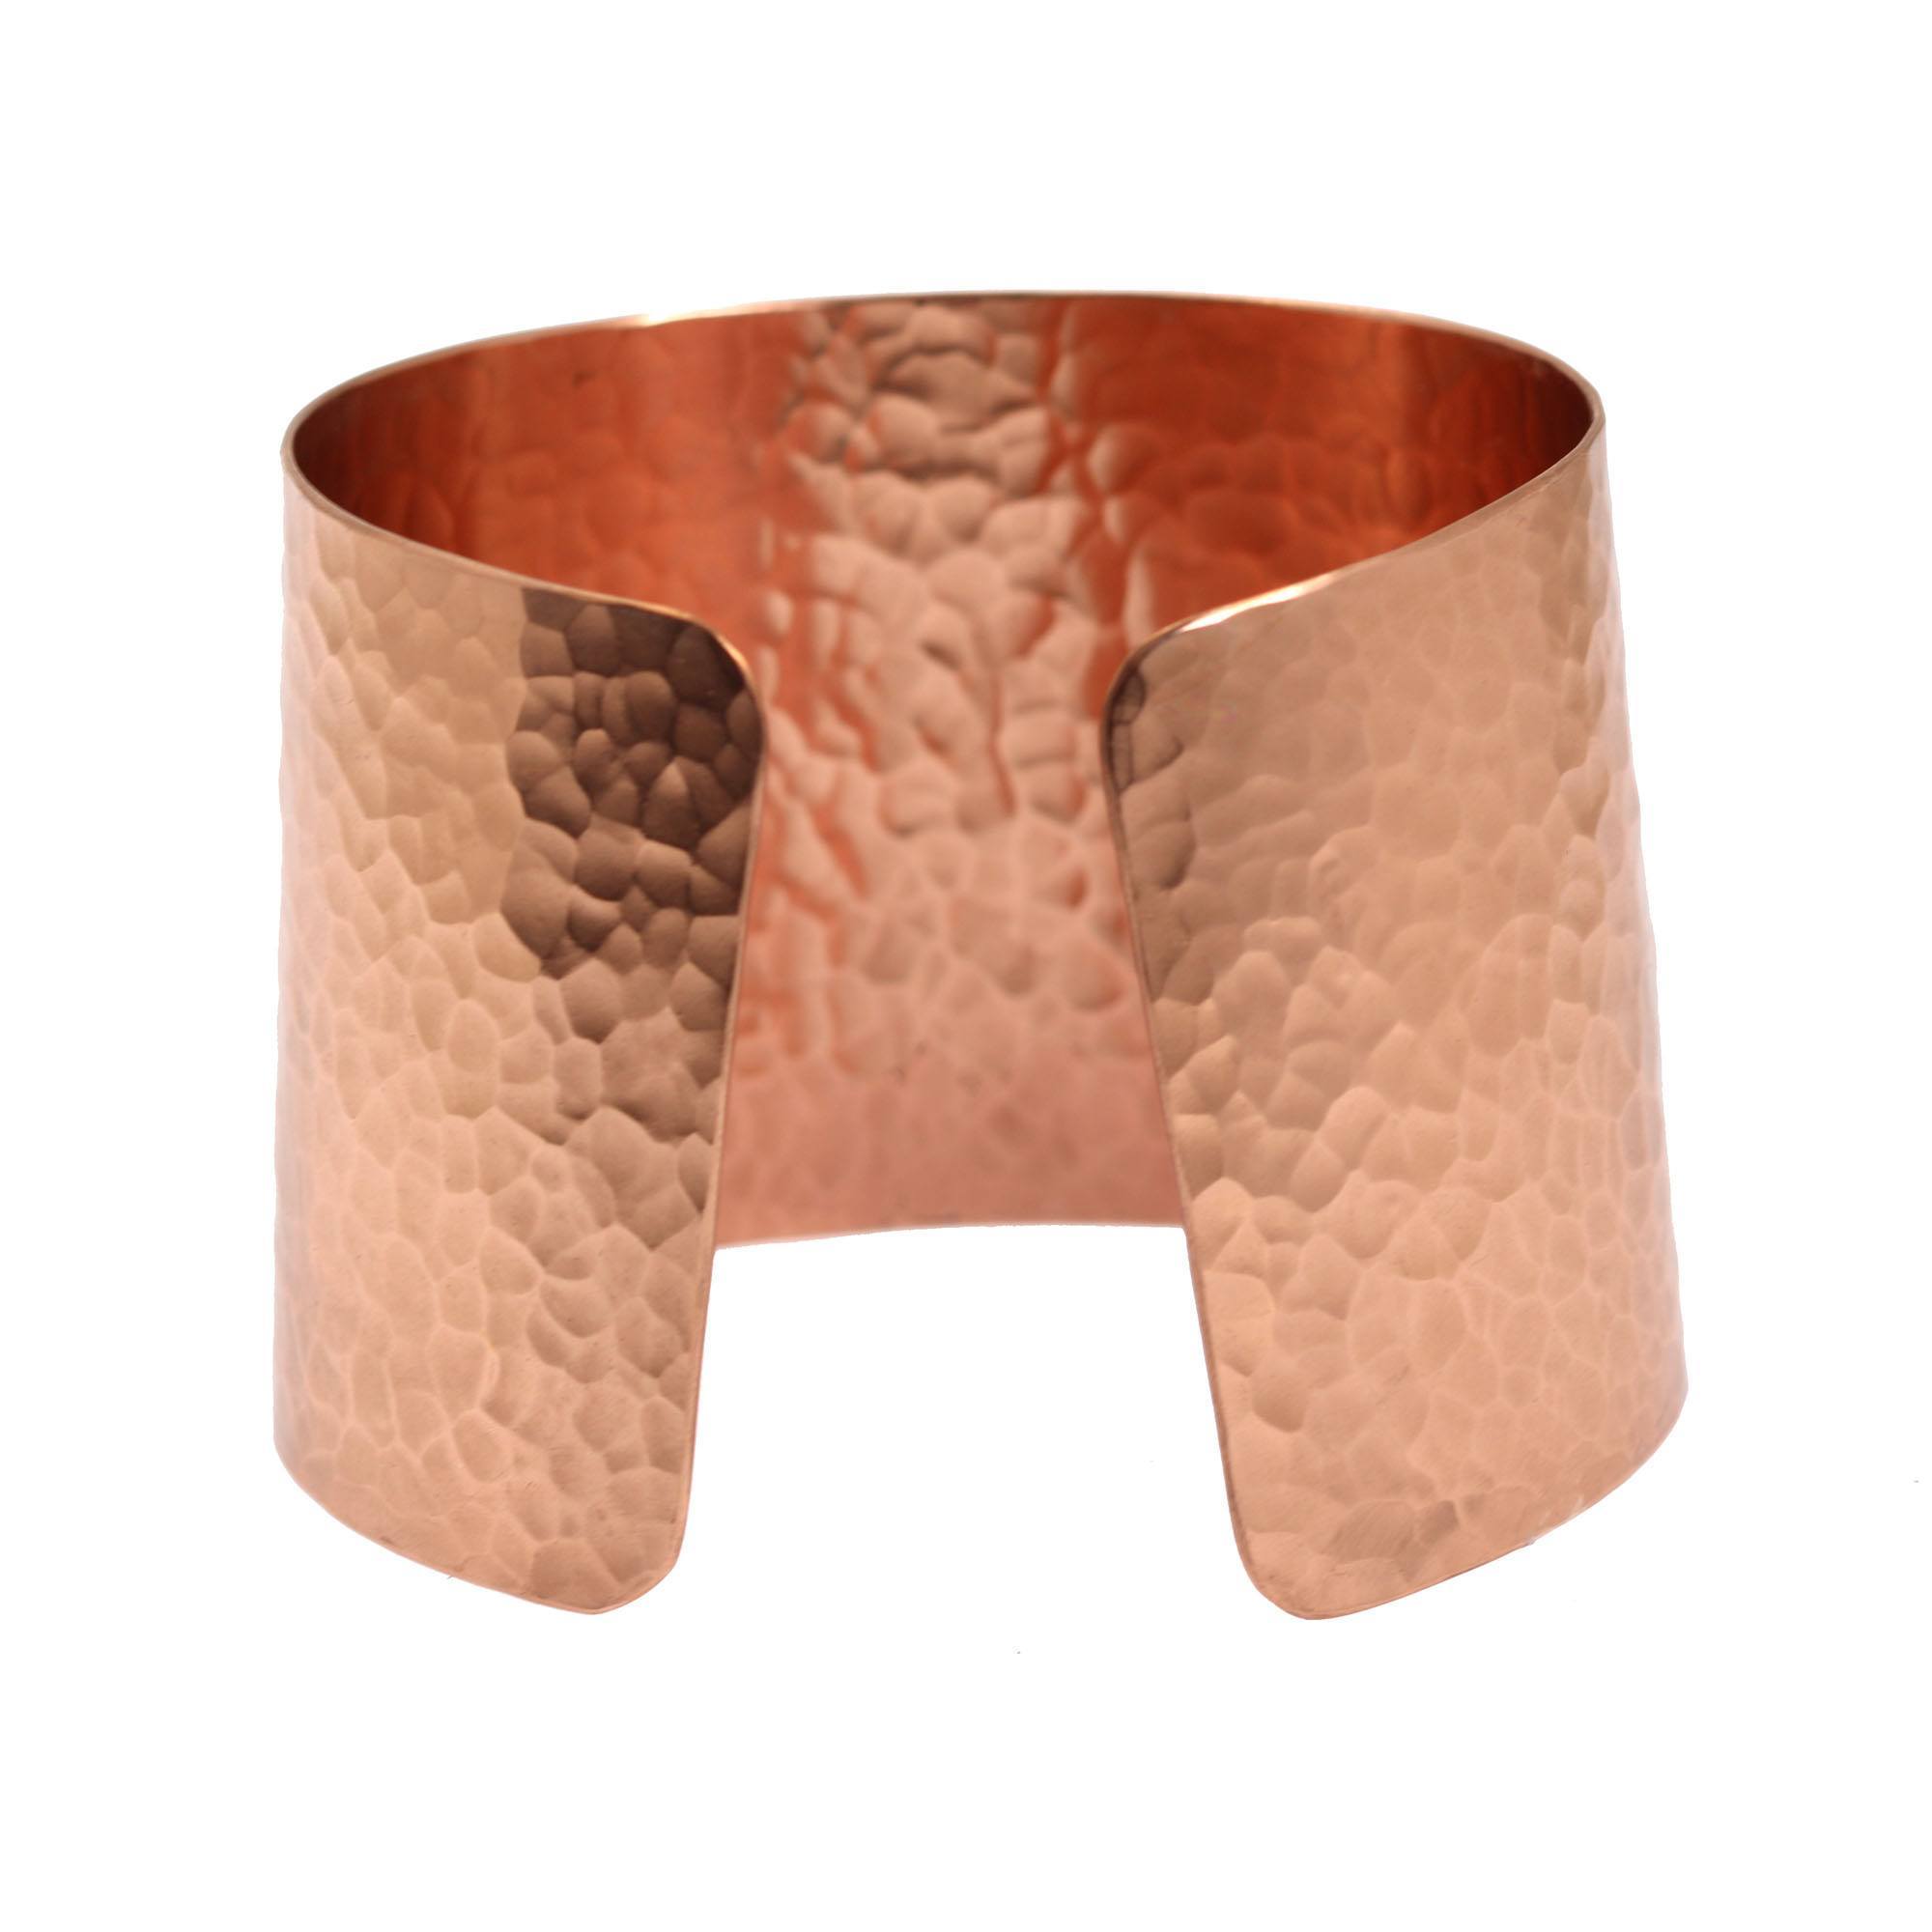 Hammered Copper Cuff Bracelet Opening